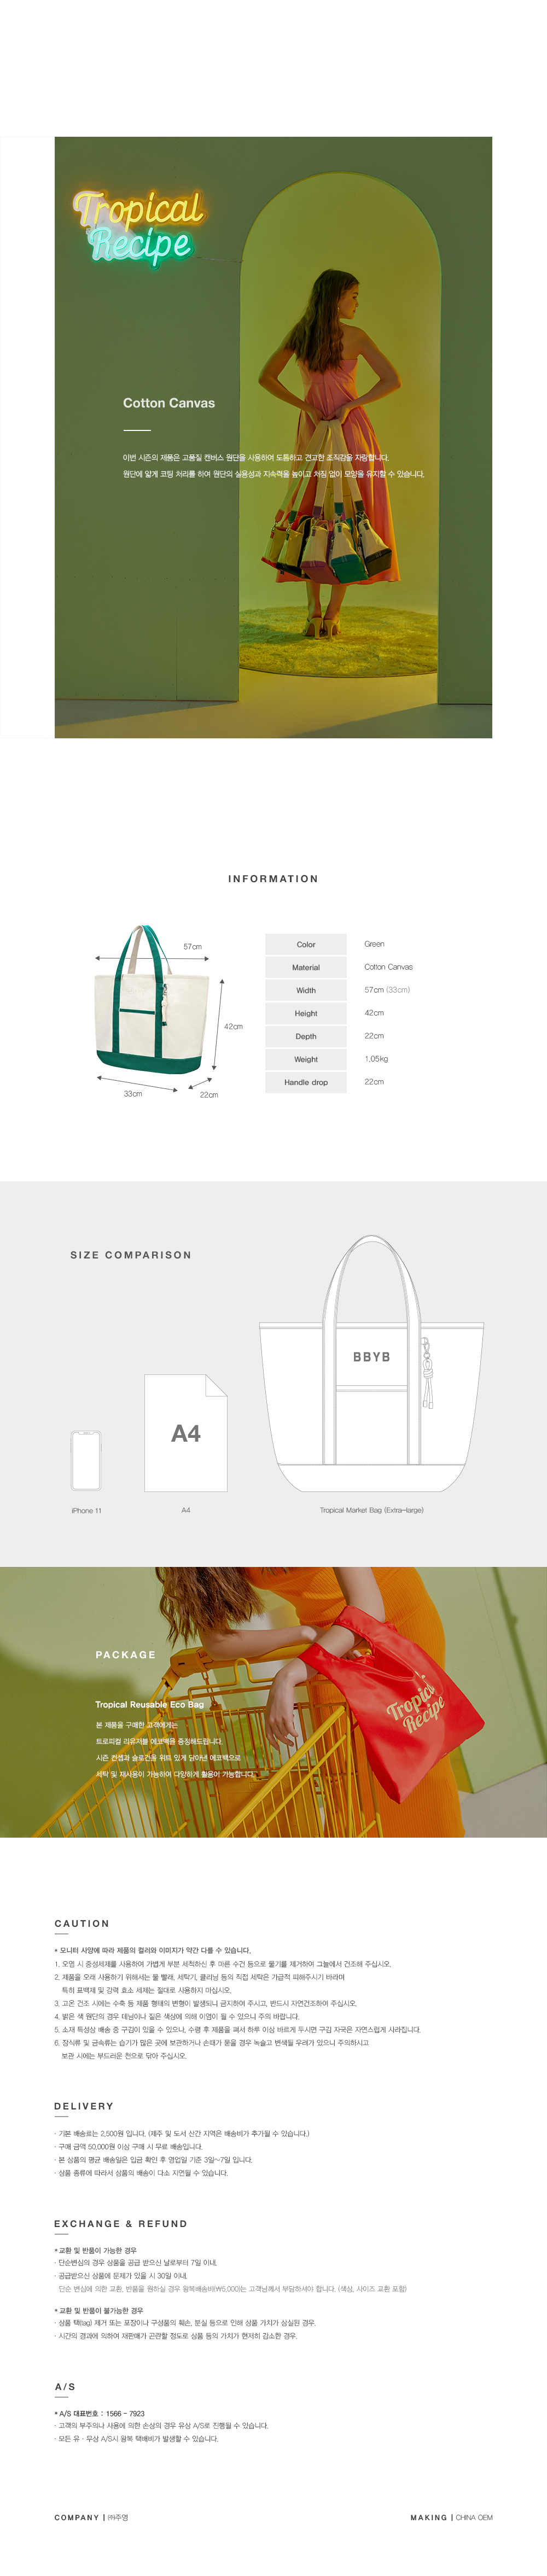 BBYB Tropical Market Bag (Extra-large) Green